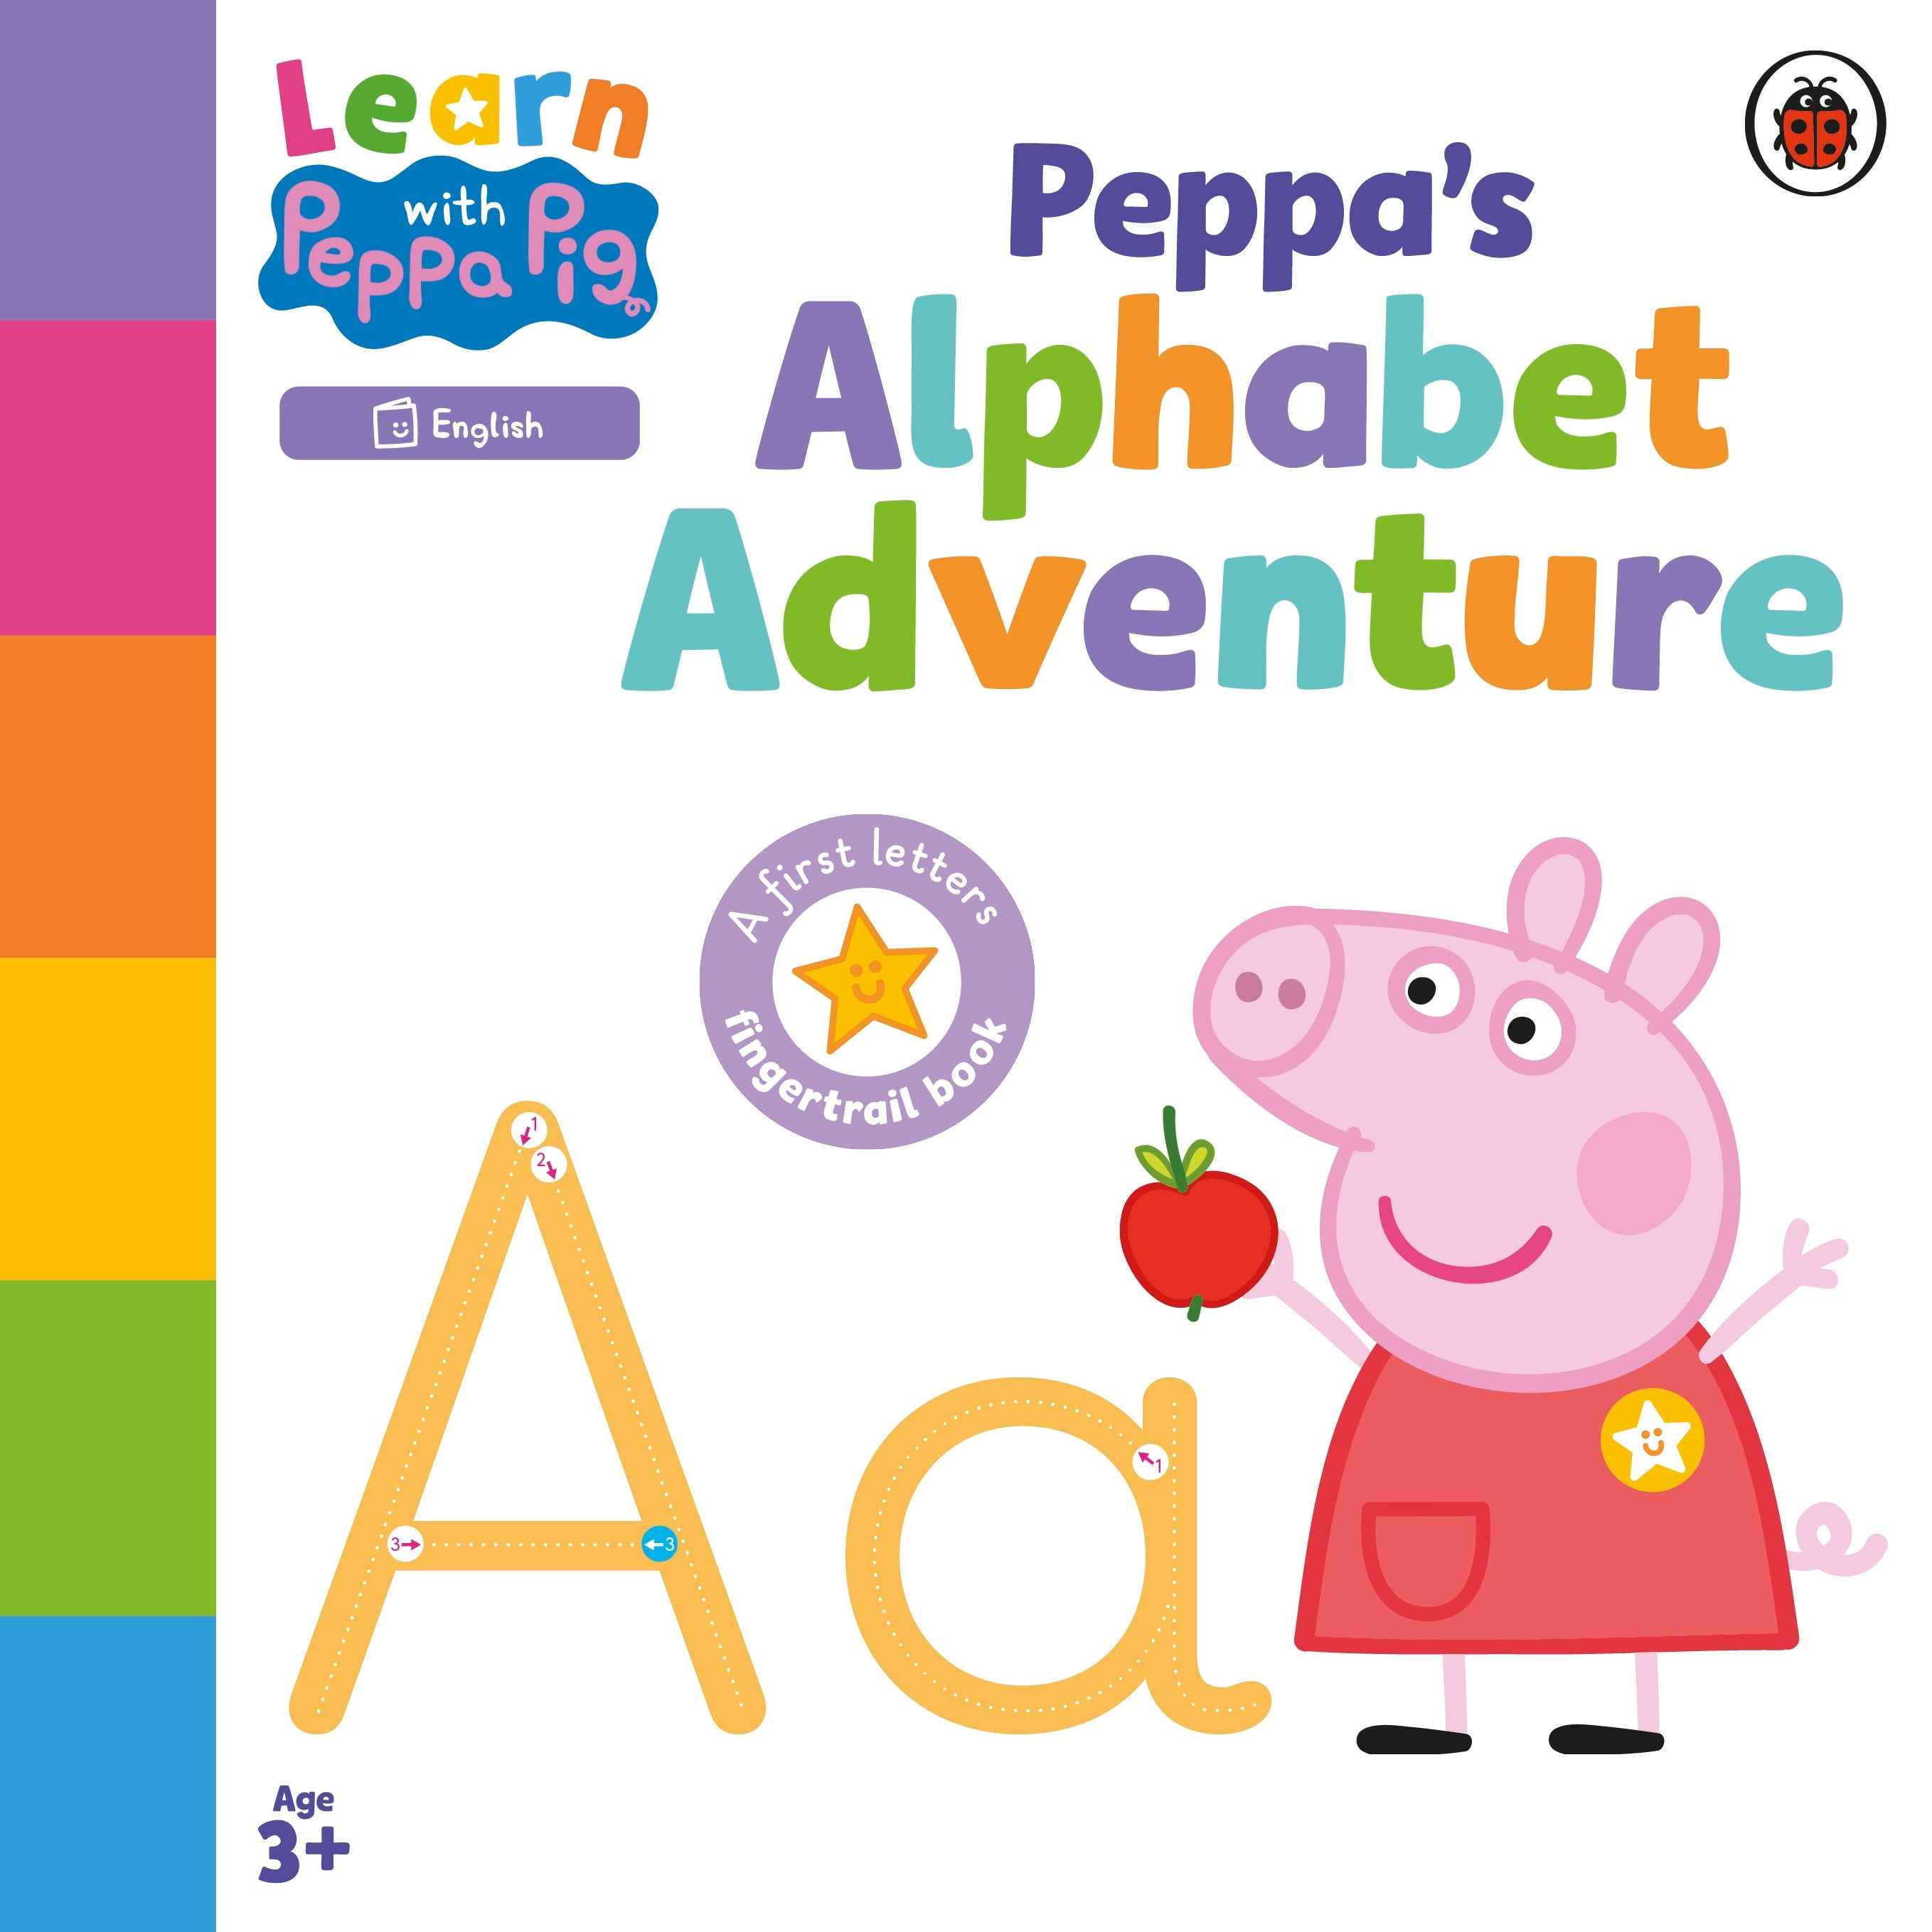 Peppa's Alphabet Adventure